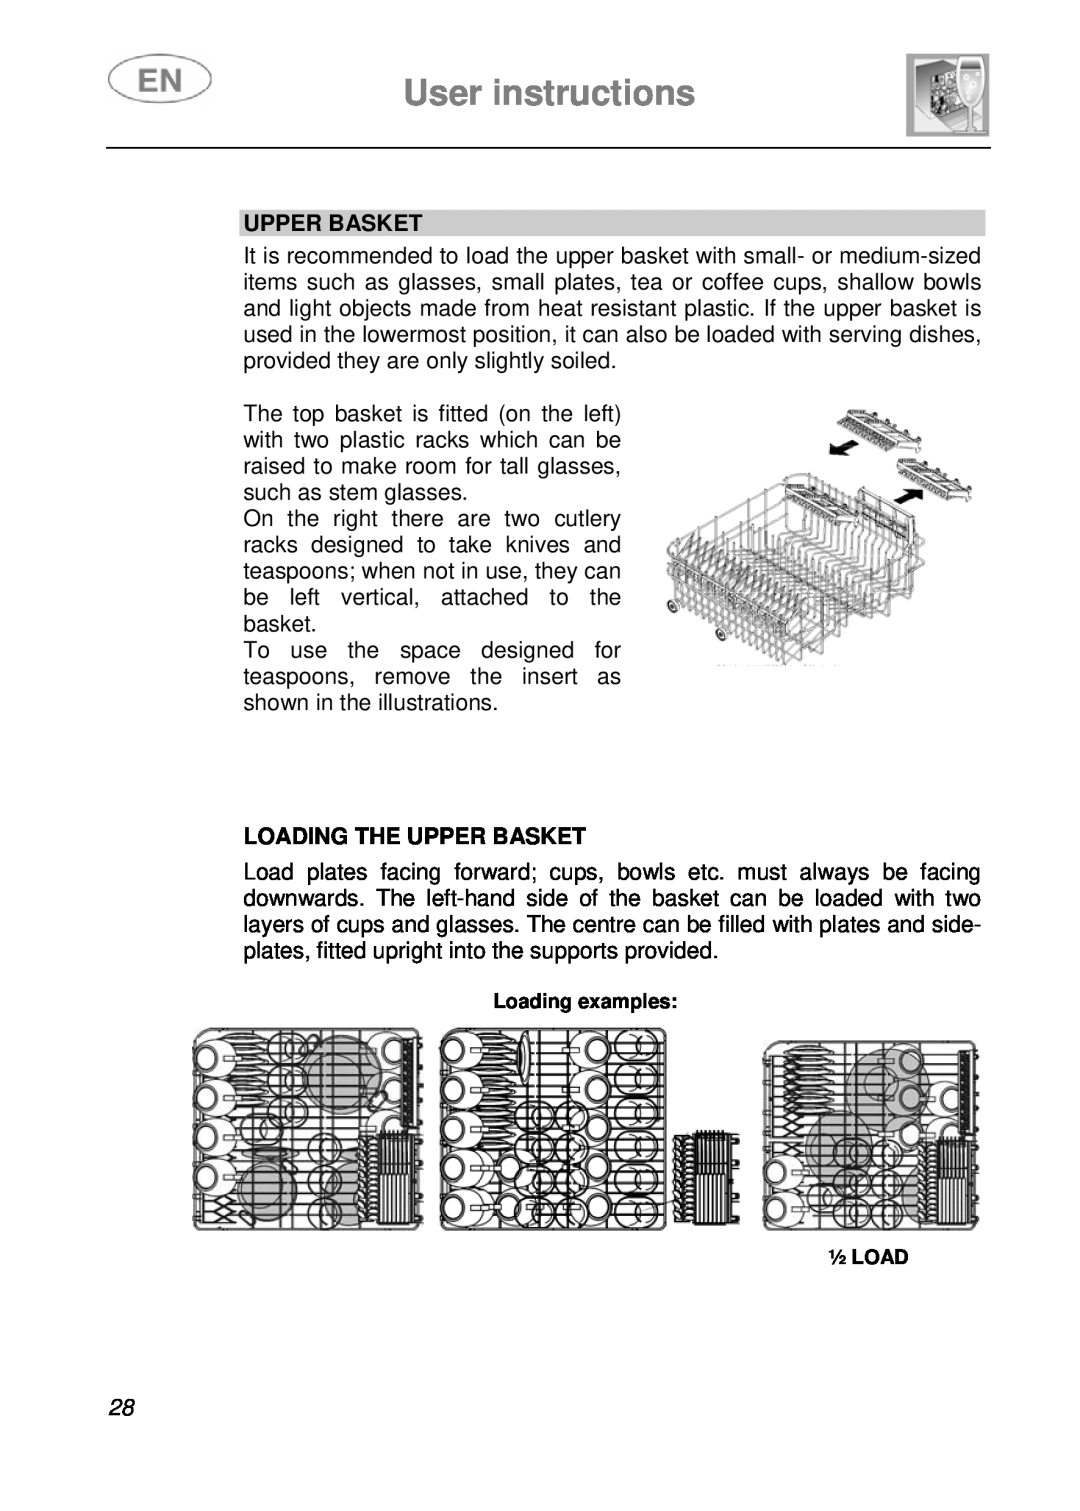 Smeg LVS1449B instruction manual User instructions, Loading The Upper Basket 